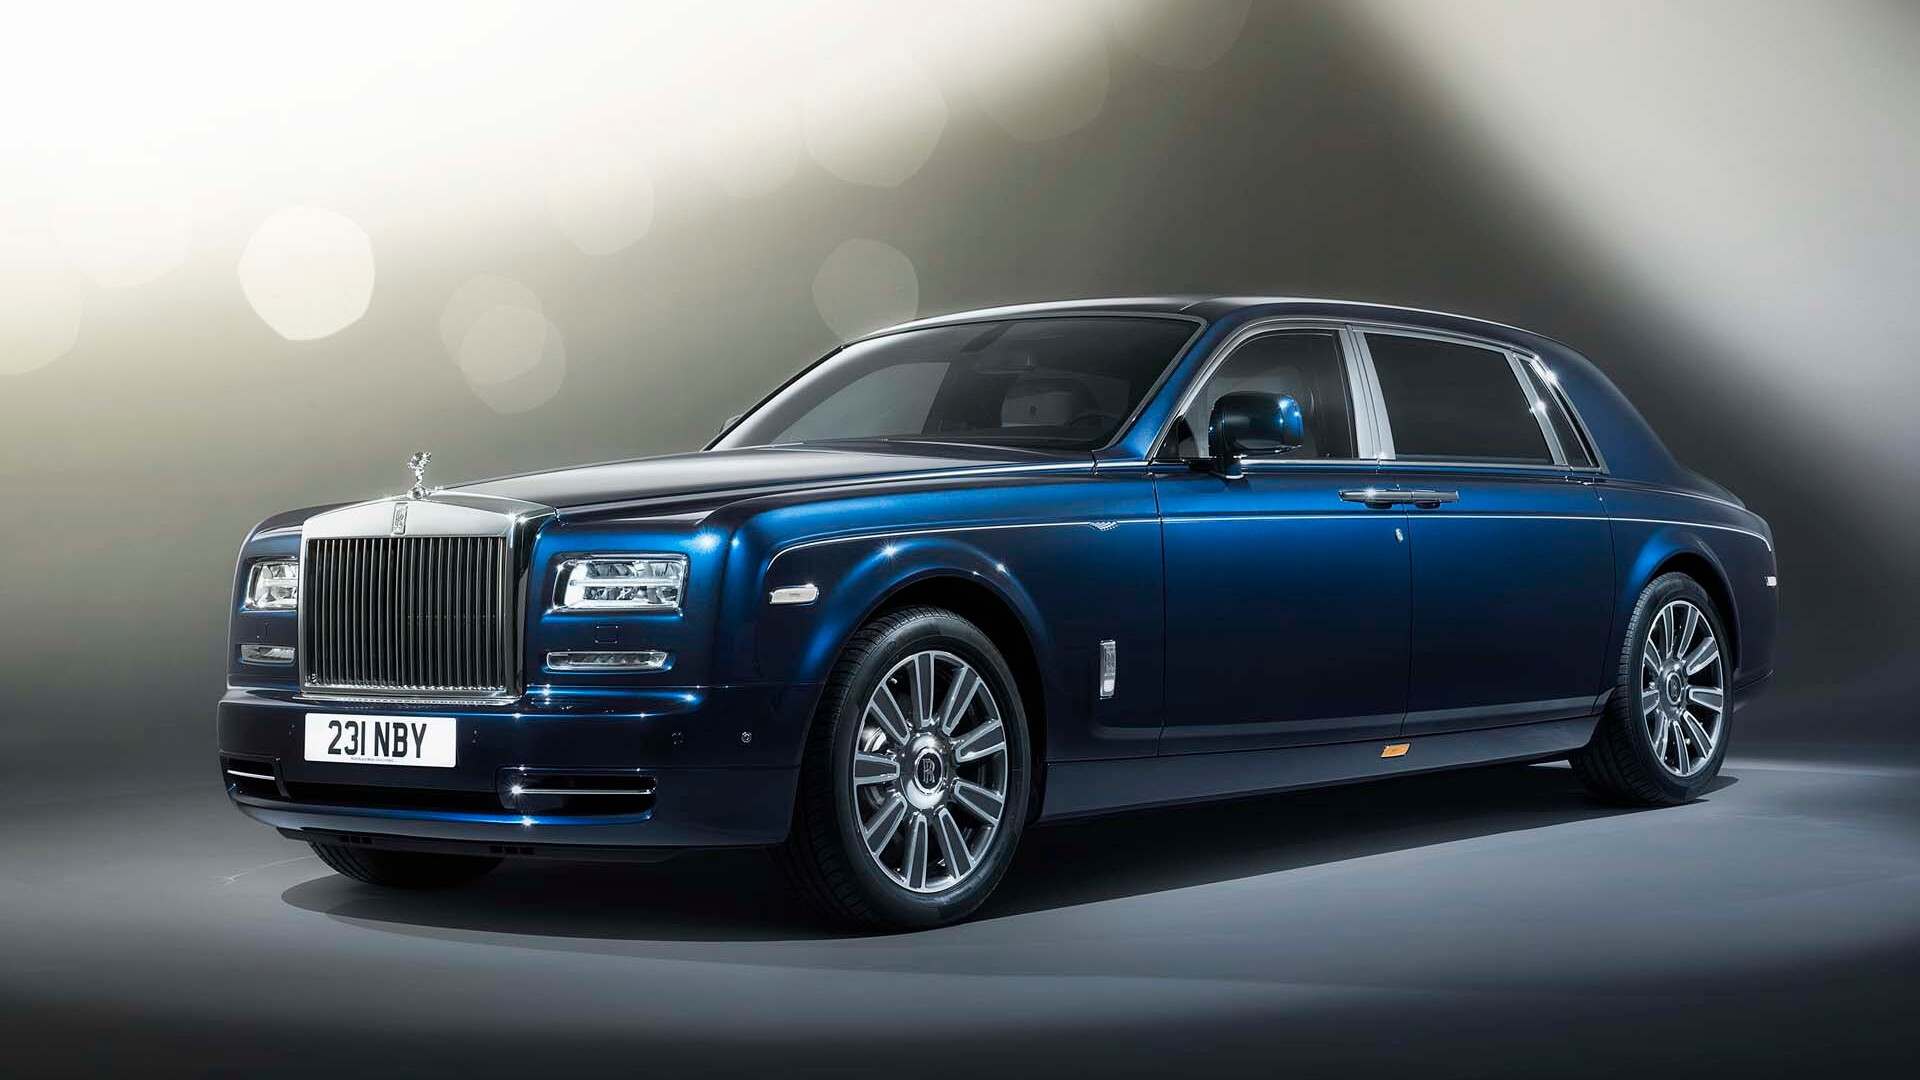 Rolls-Royce Phantom Limelight Collection